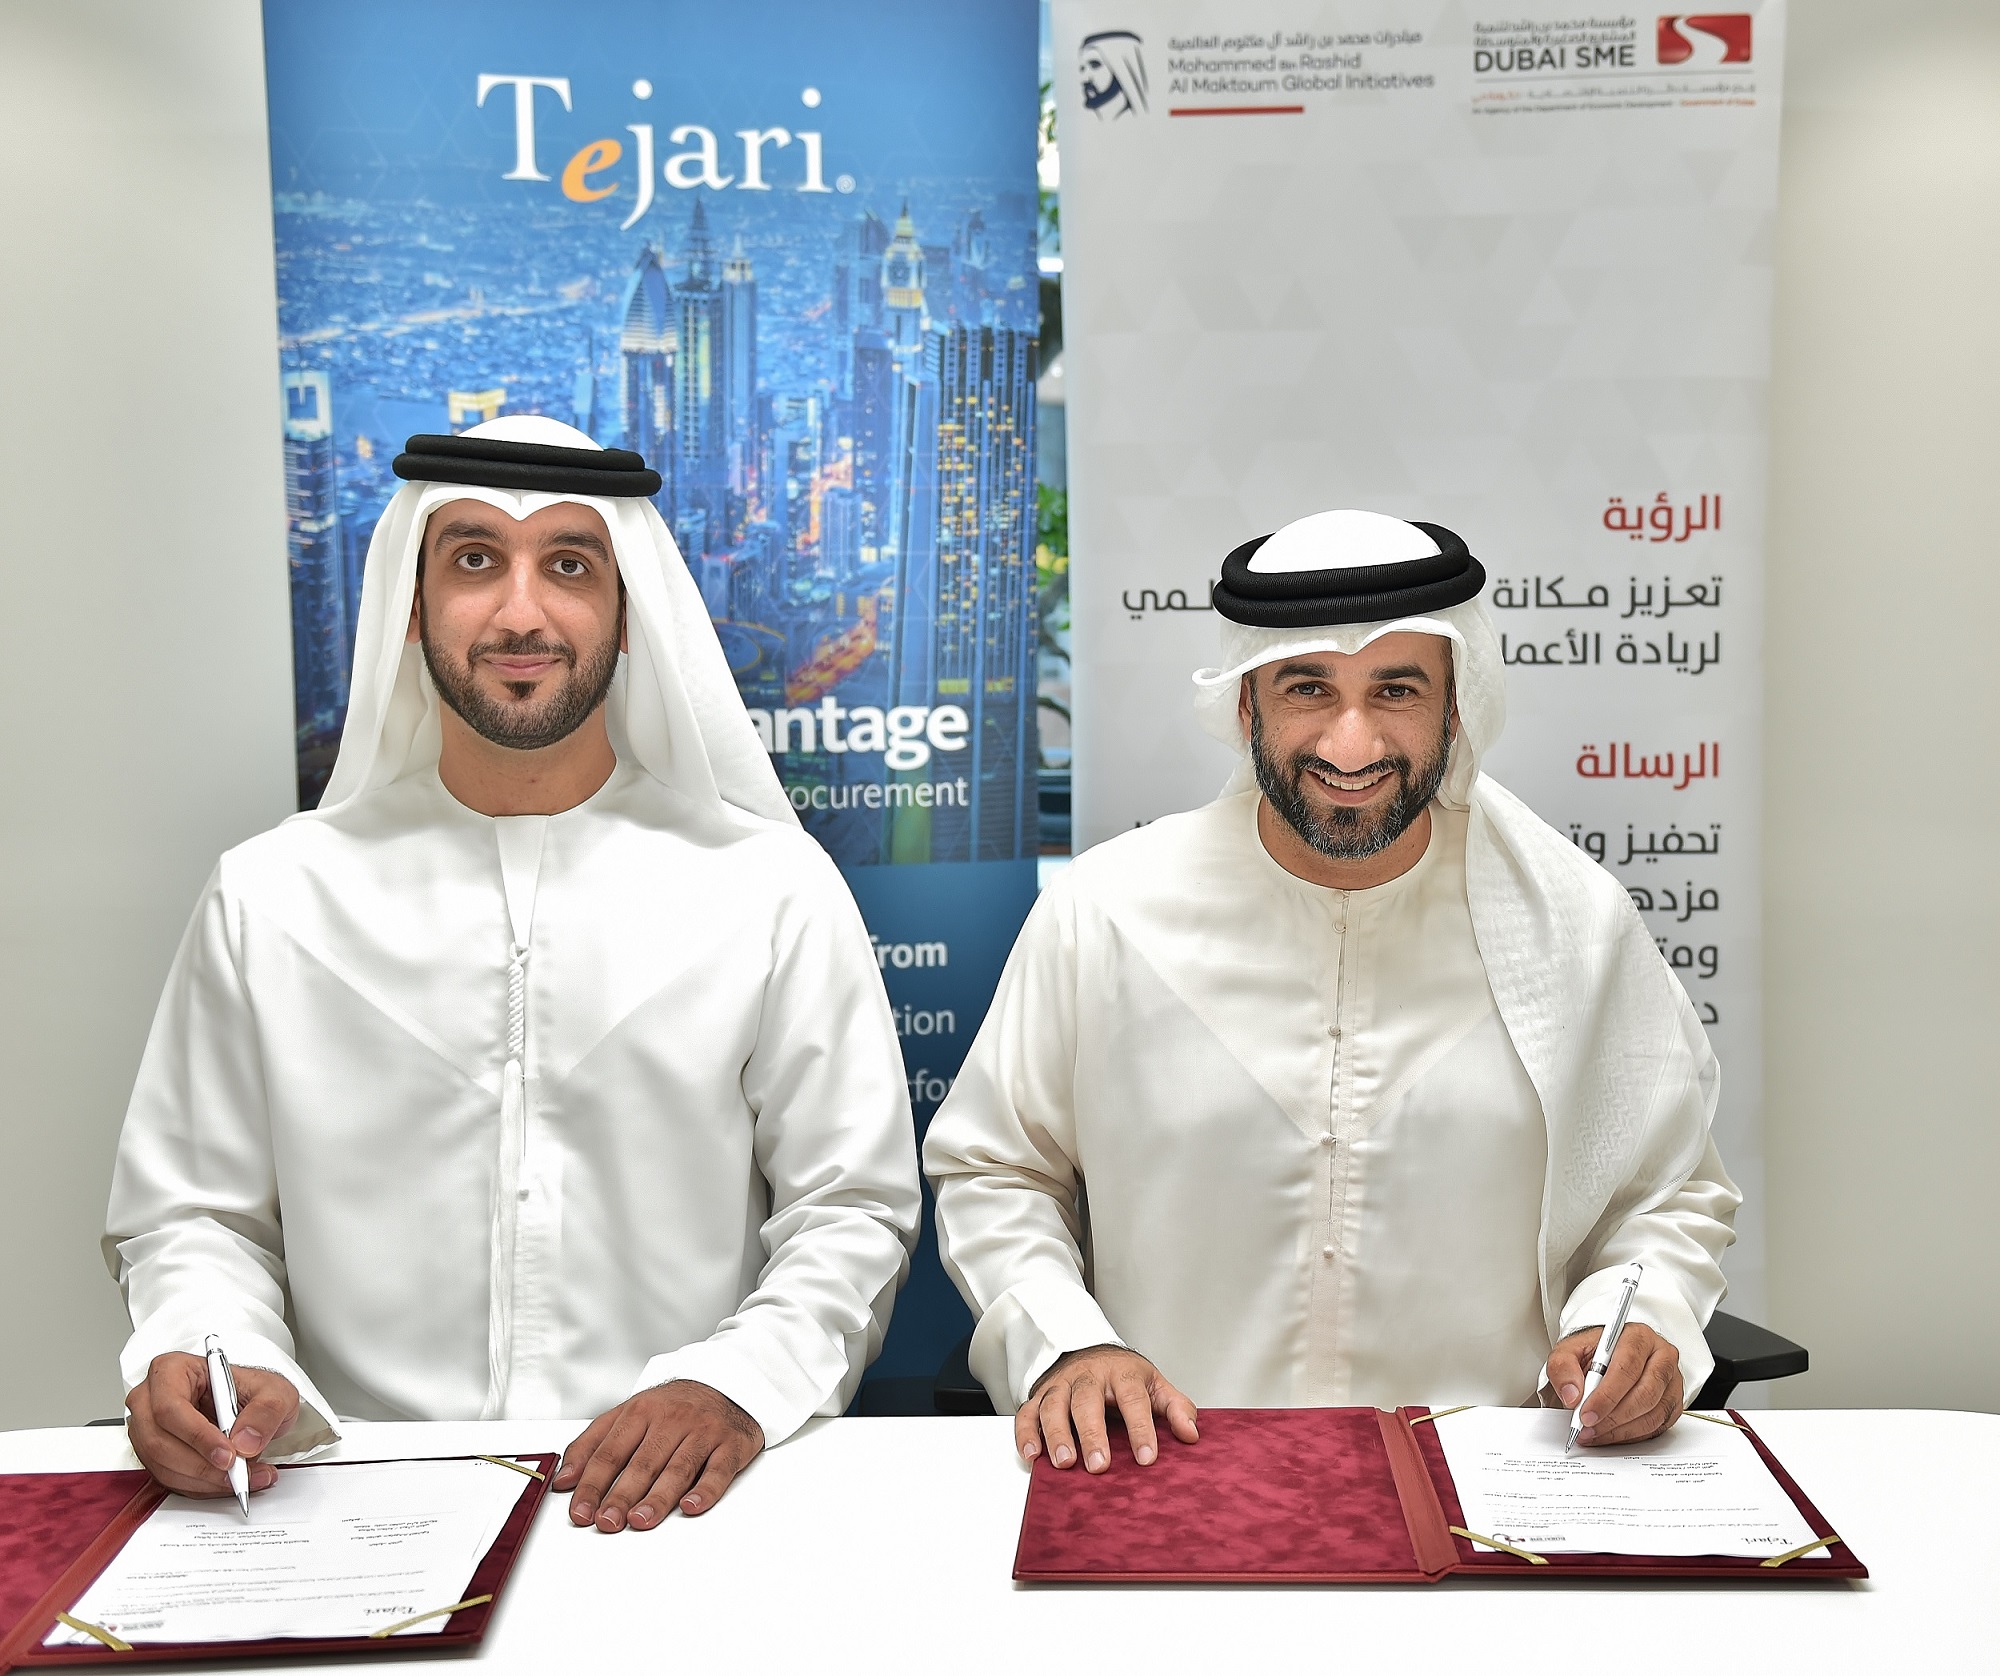 Tejari signs MoU with Dubai SME to streamline procurement services